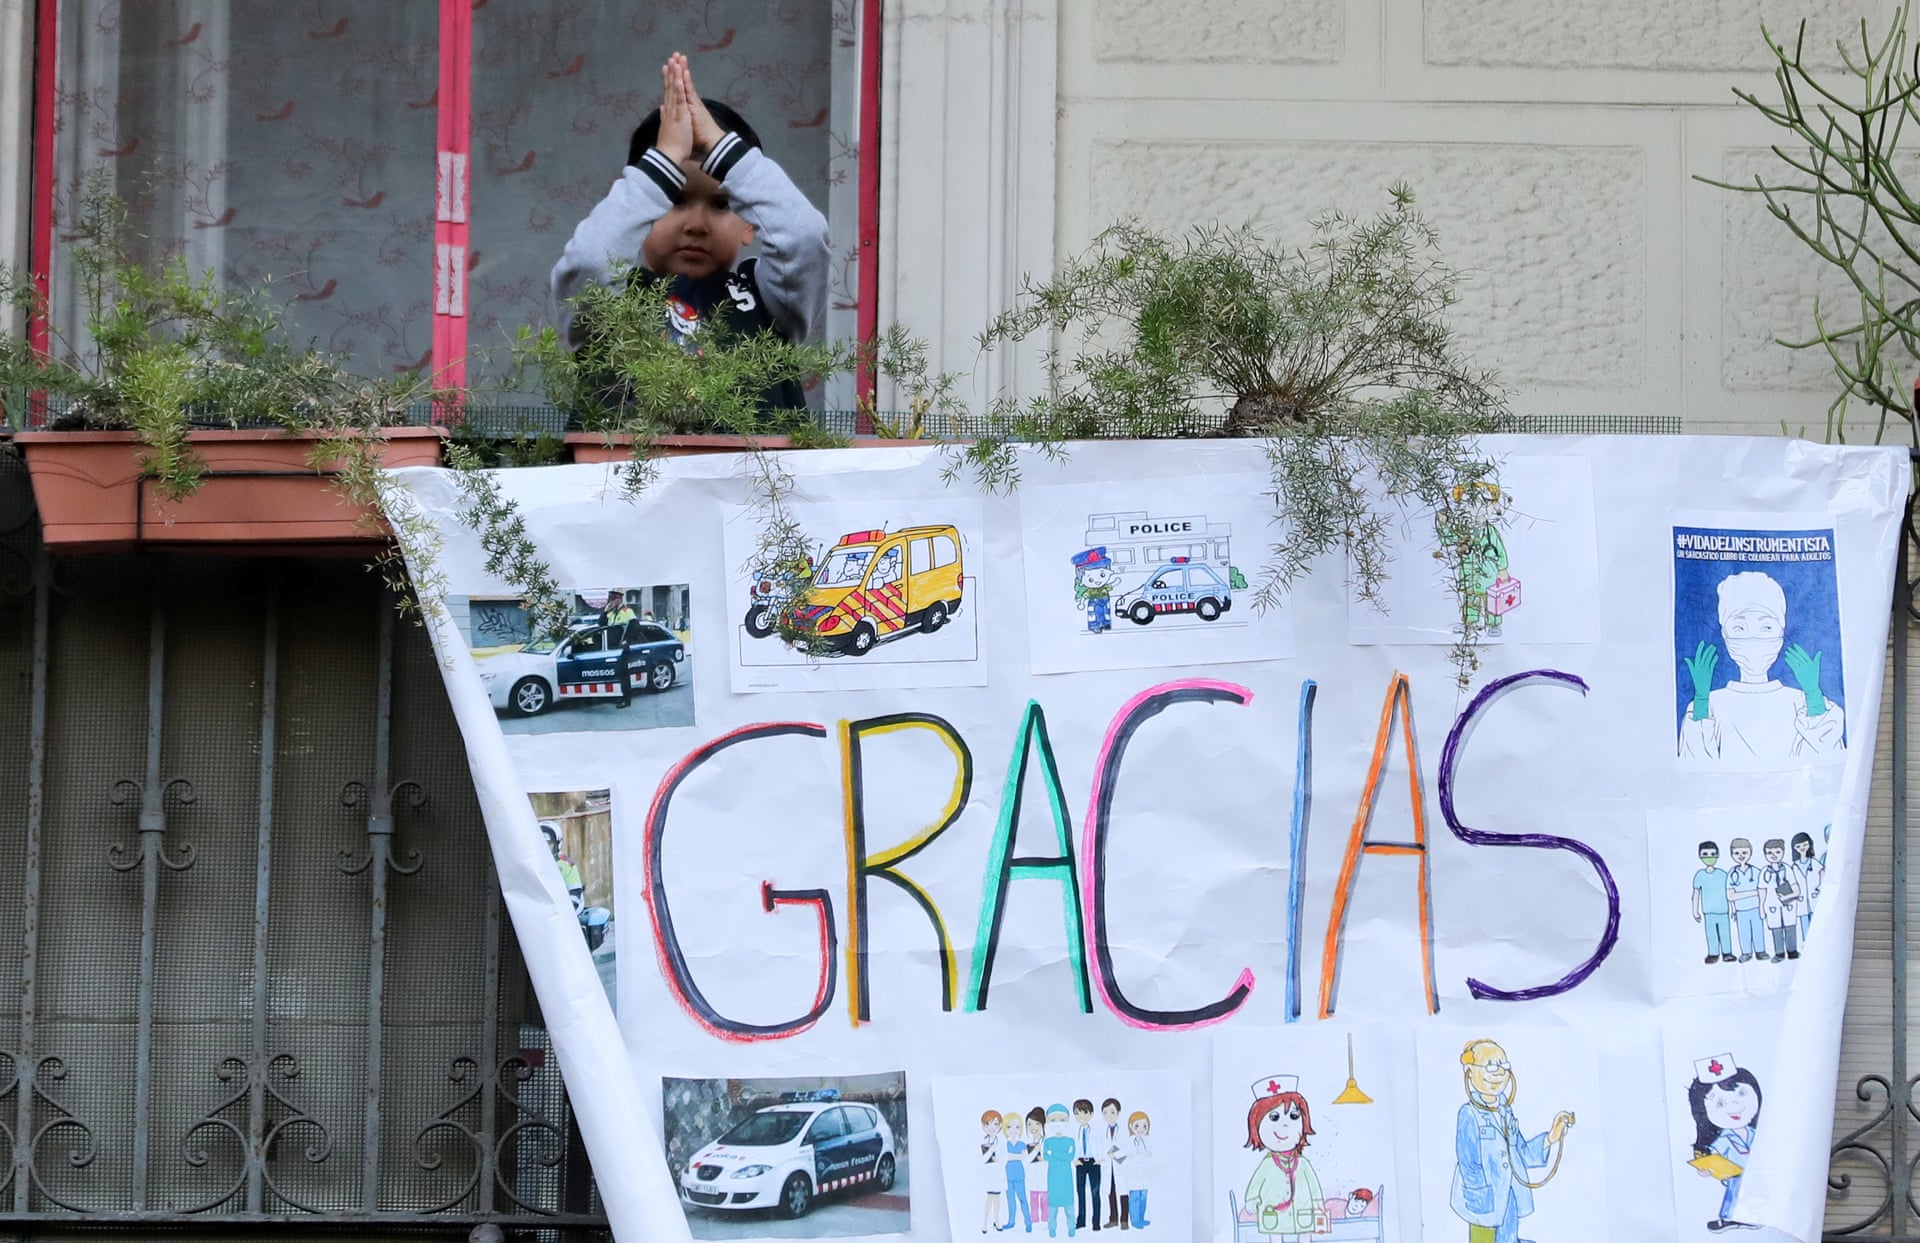 Испаниянинг Барселона шаҳридаги балконлардан бирида шифокорларга миннатдорчилик билдирилган плакат.